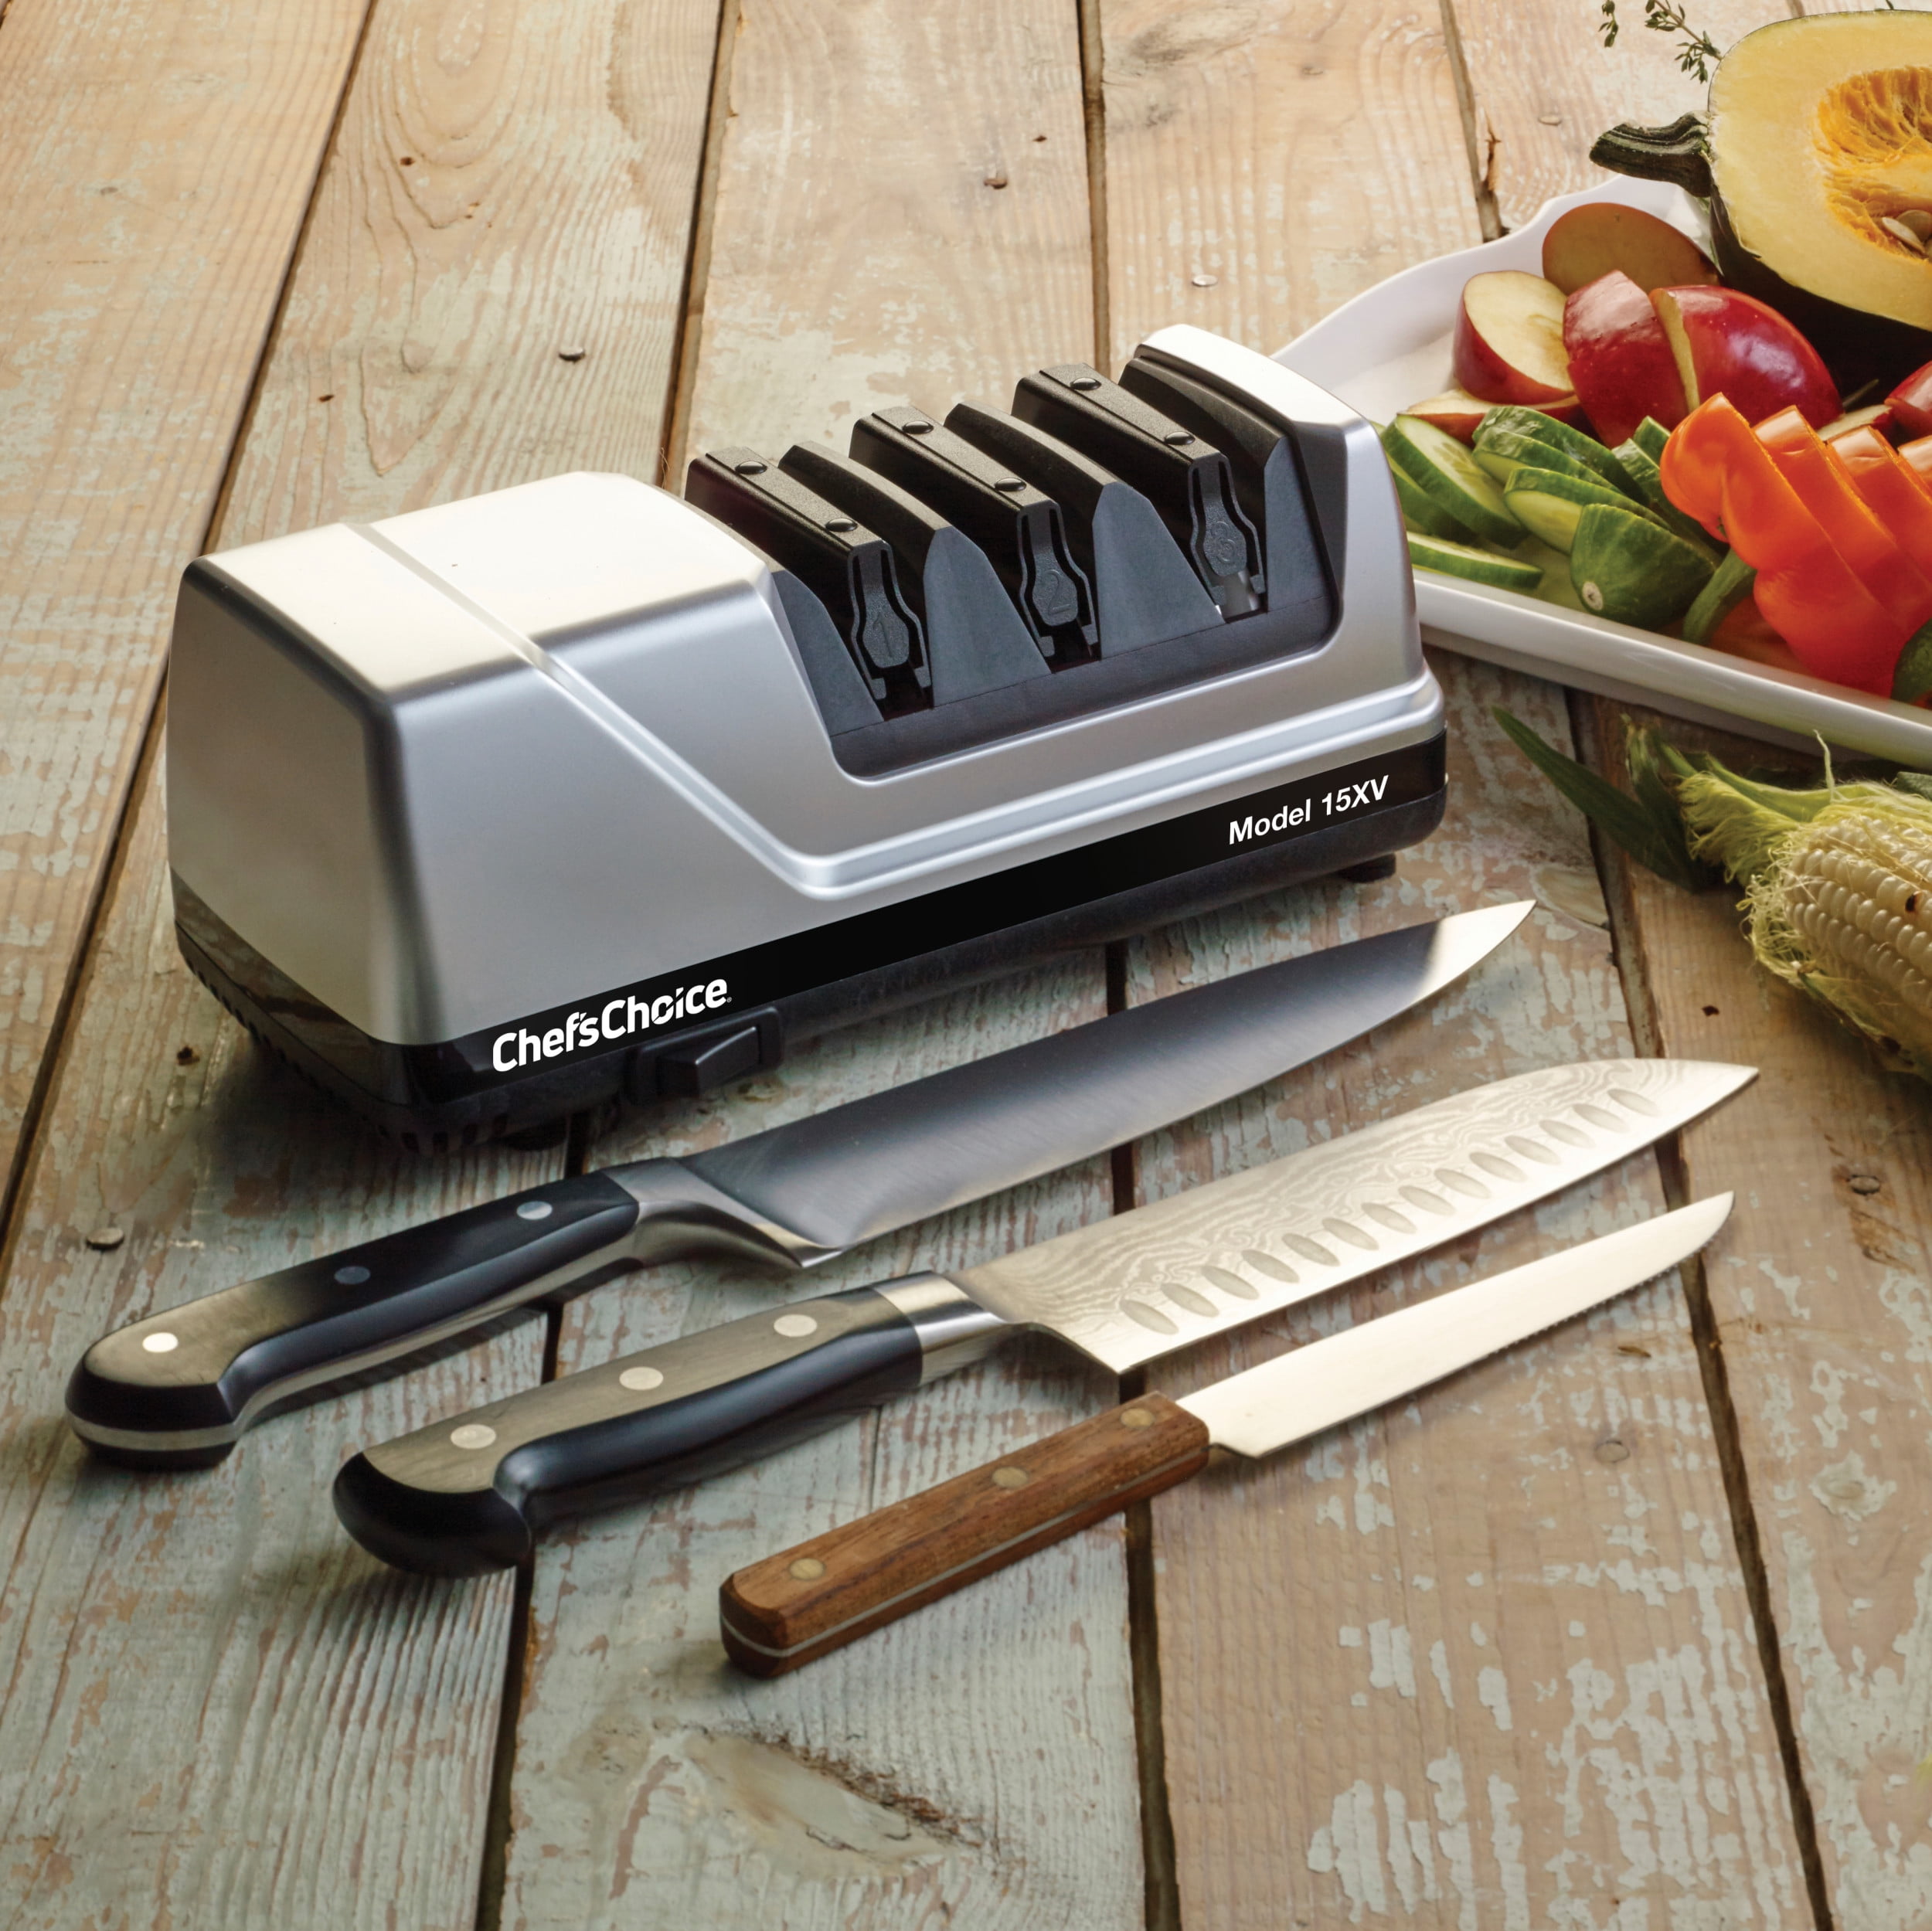 Chef's Choice Electric Knife Sharpener: Model 15XV – Zest Billings, LLC